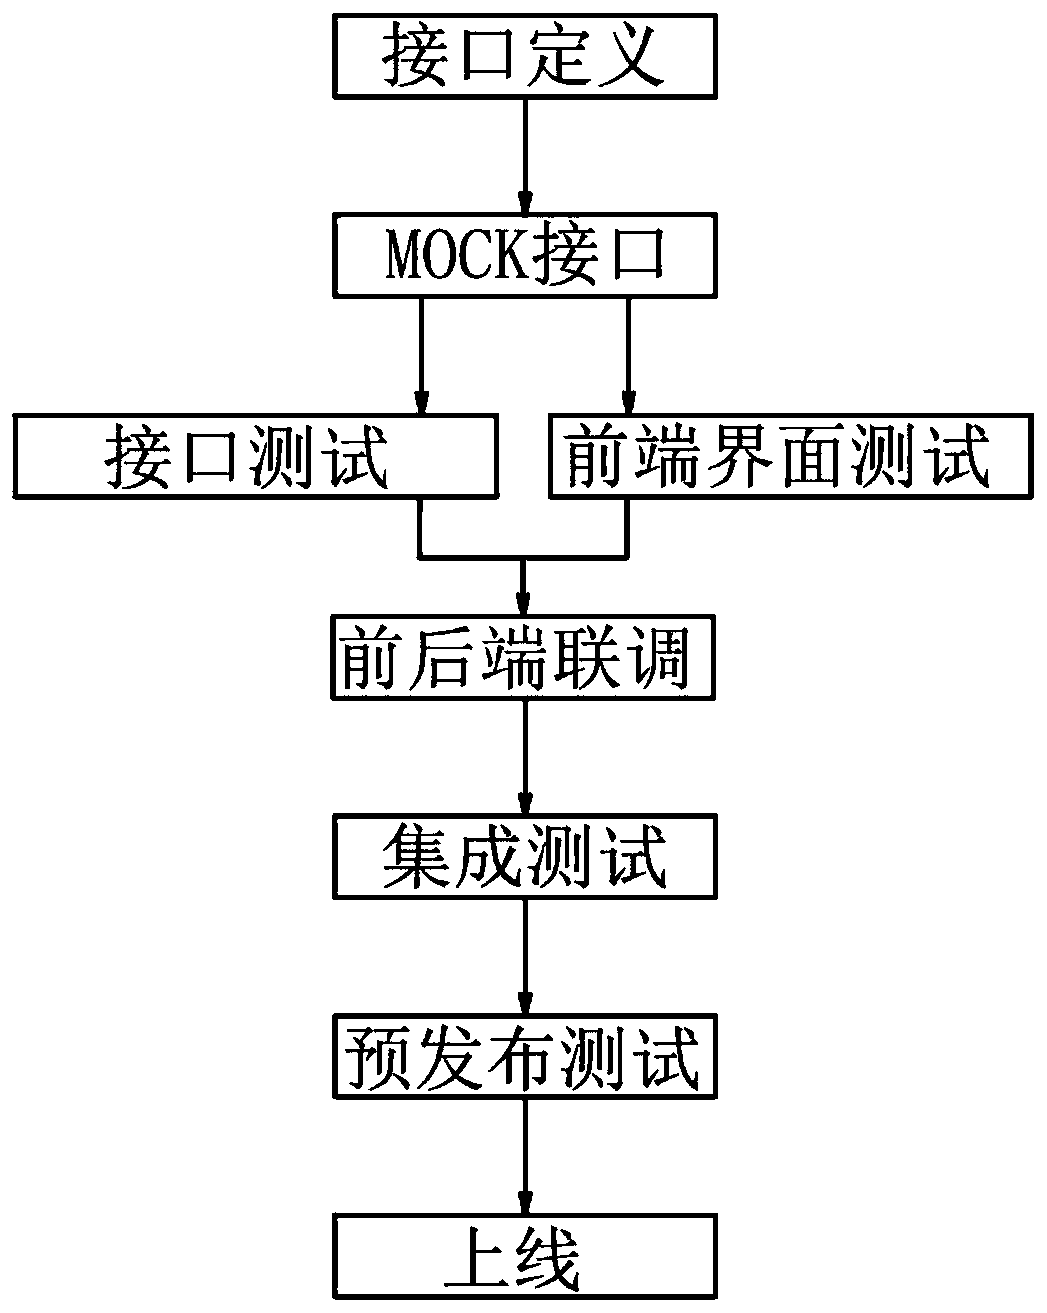 Test method based on MOCK technology